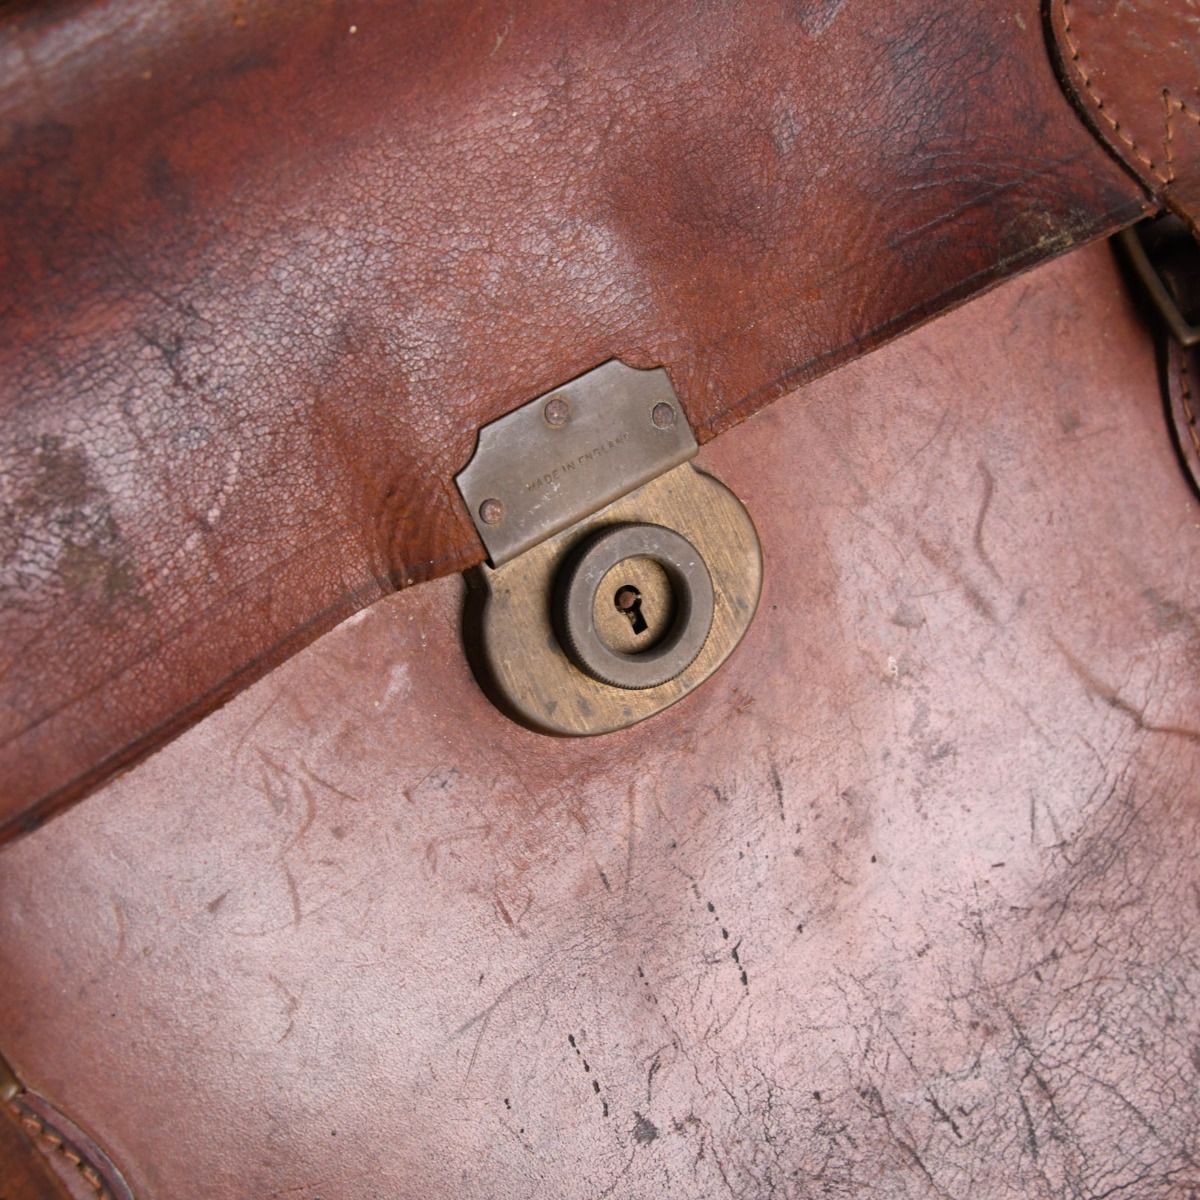 Vintage 1940s Leather Briefcase